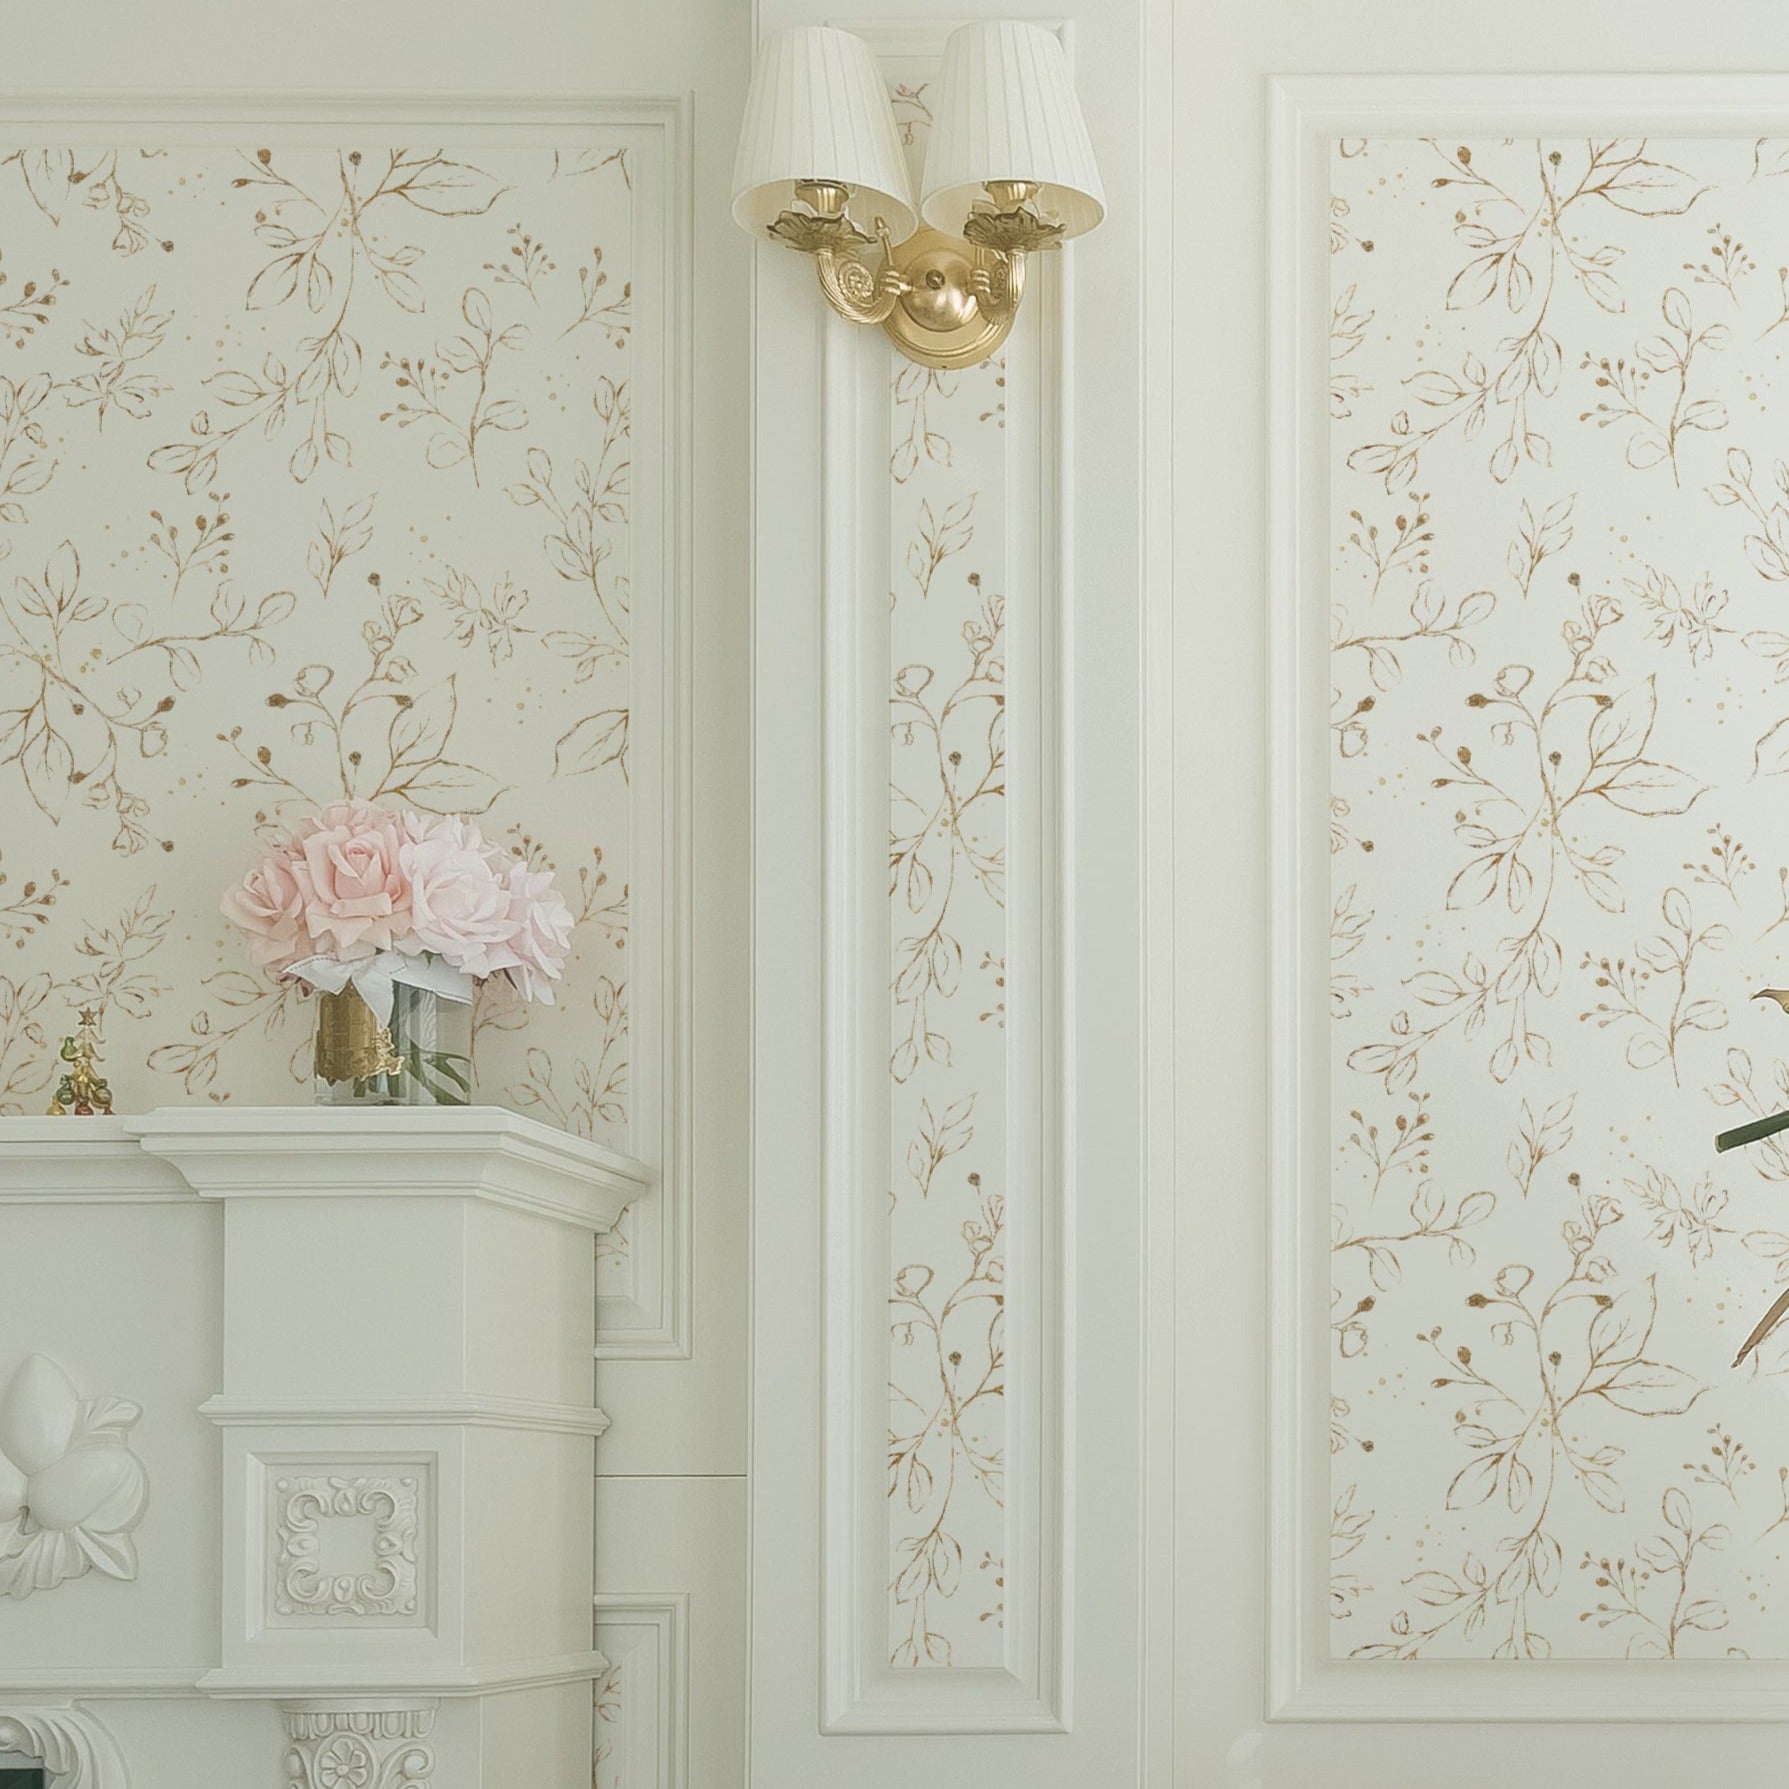 wallpaper, peel and stick wallpaper, Home decor, gold leaves wallpapers, golden wallpaper, bedroom wallpapers, floral wallpaper,  